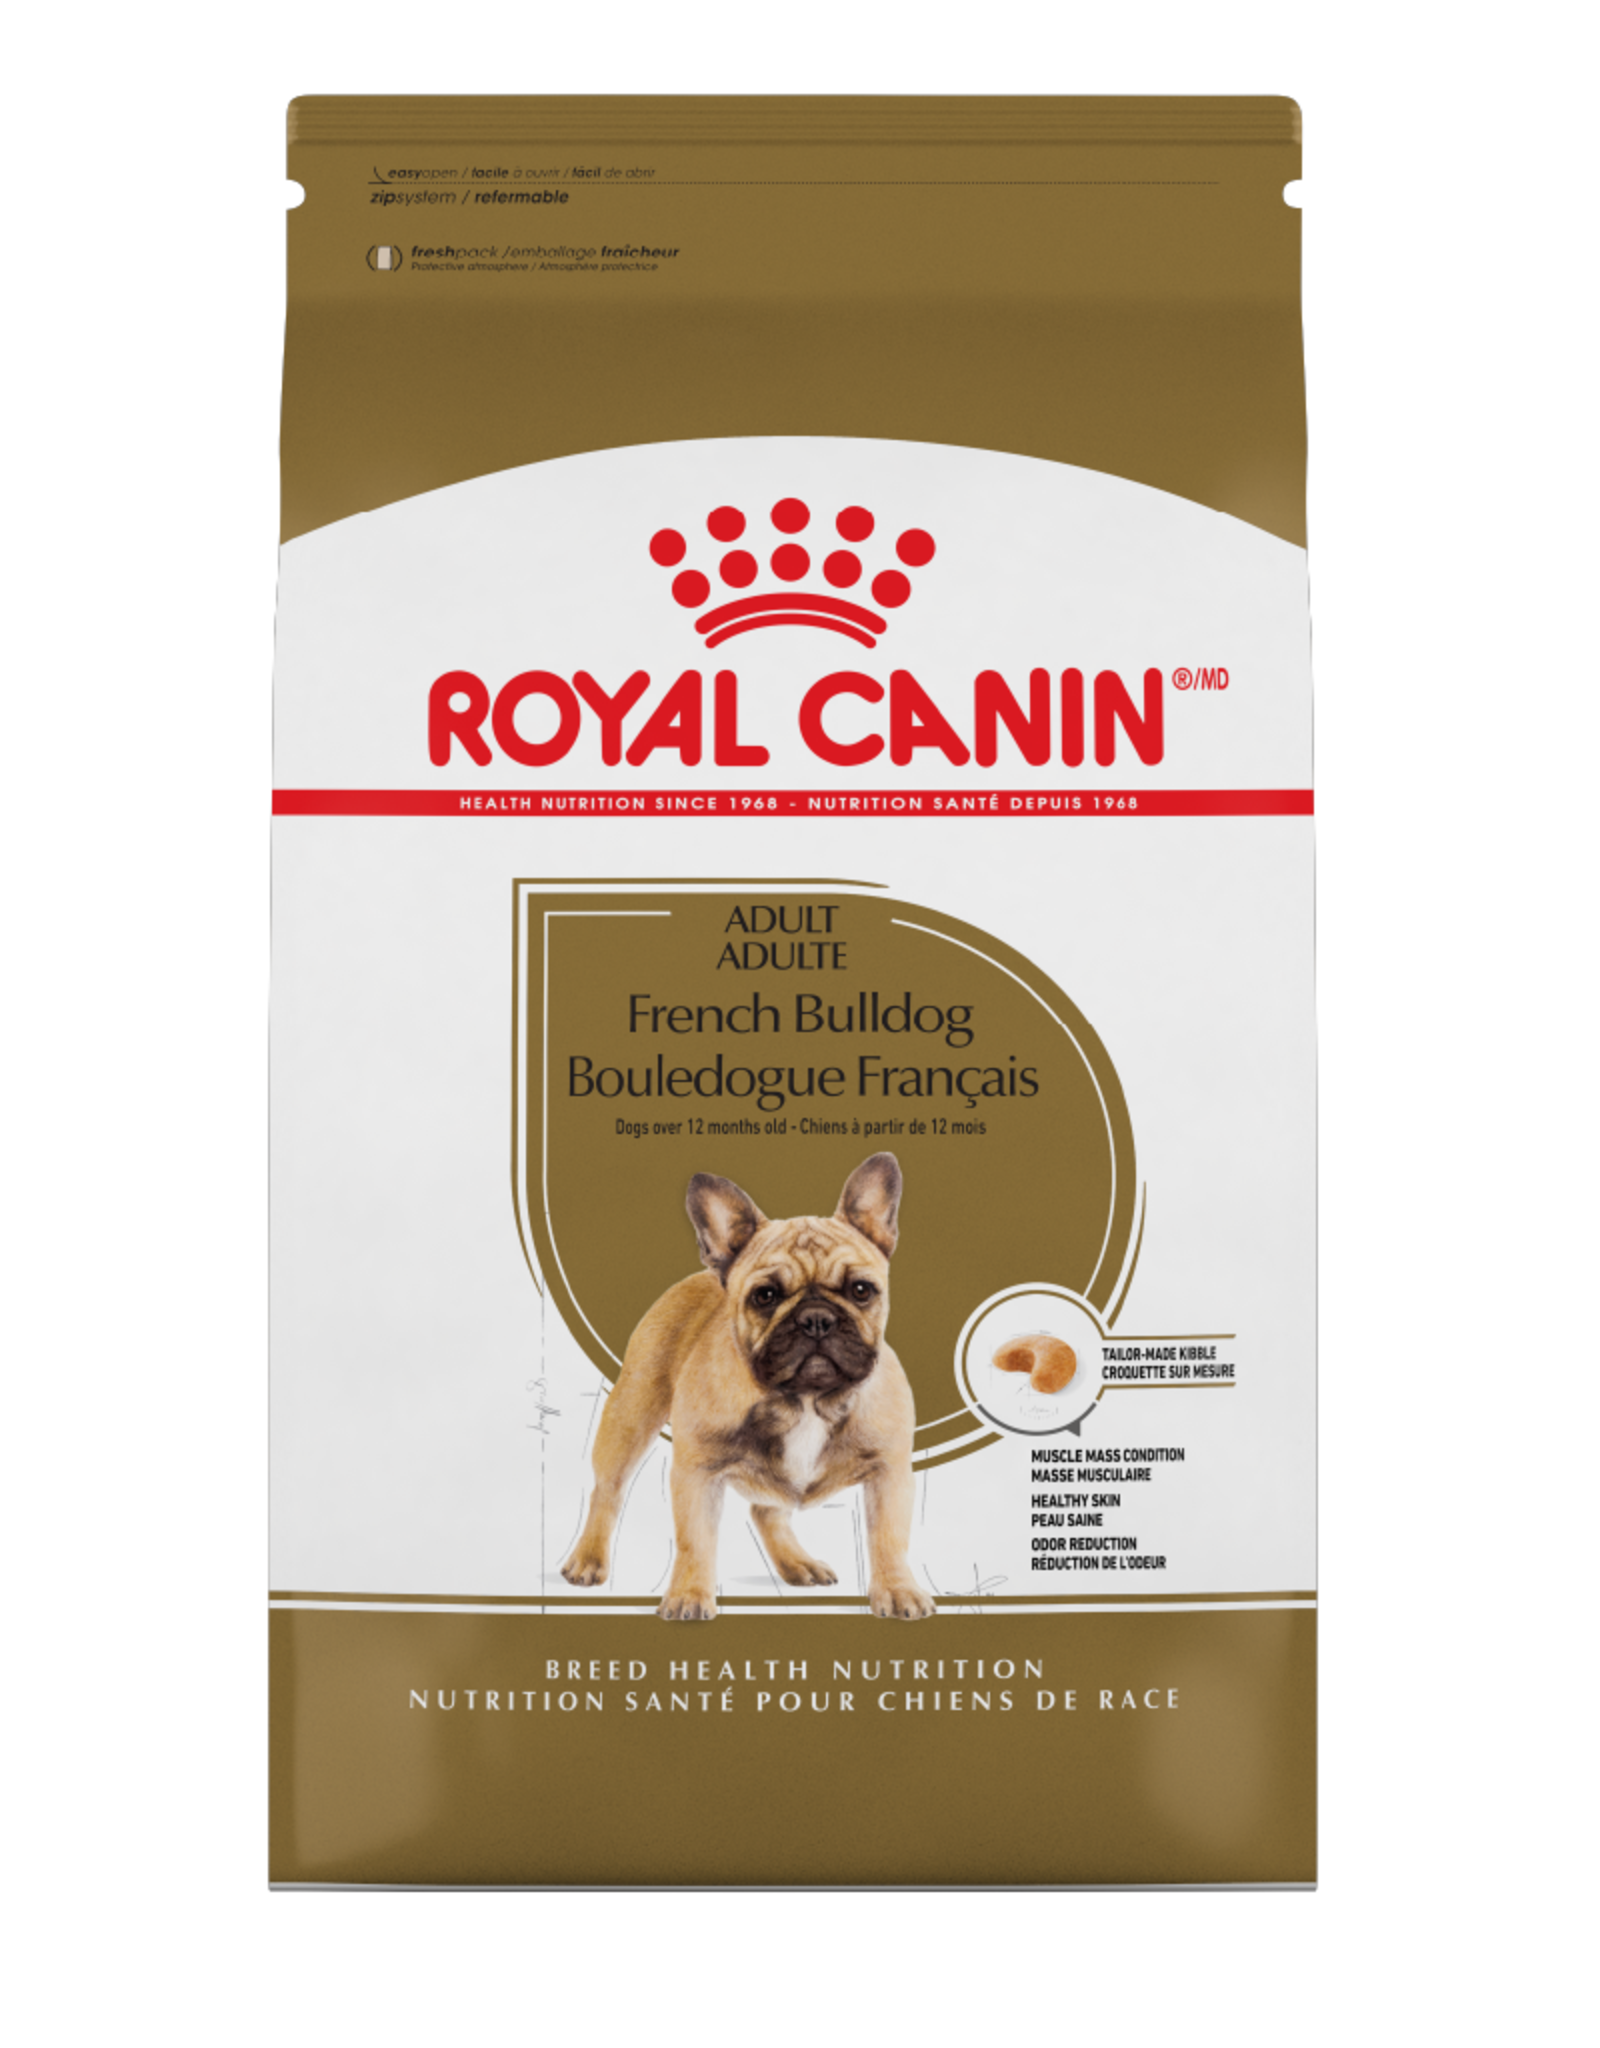 royal canin french bulldog puppy